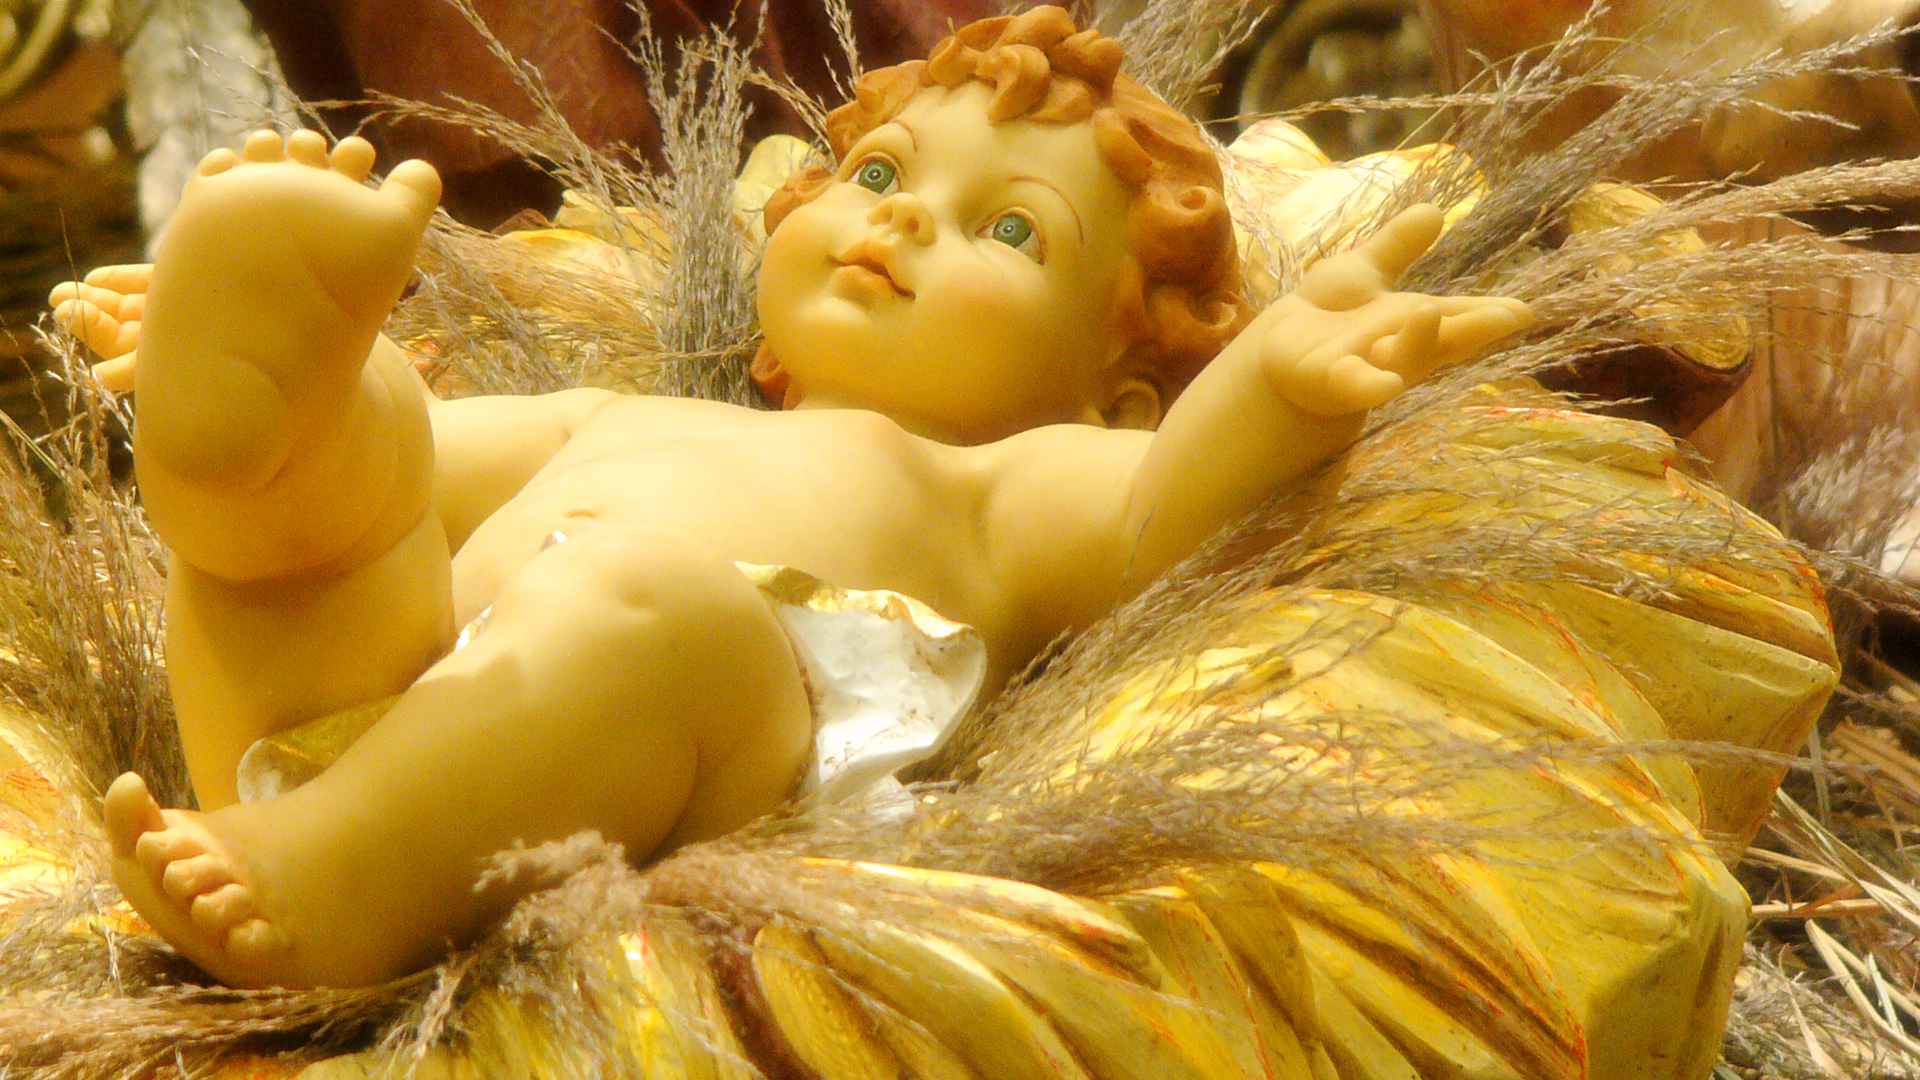 Baby Jesus Images Free Download